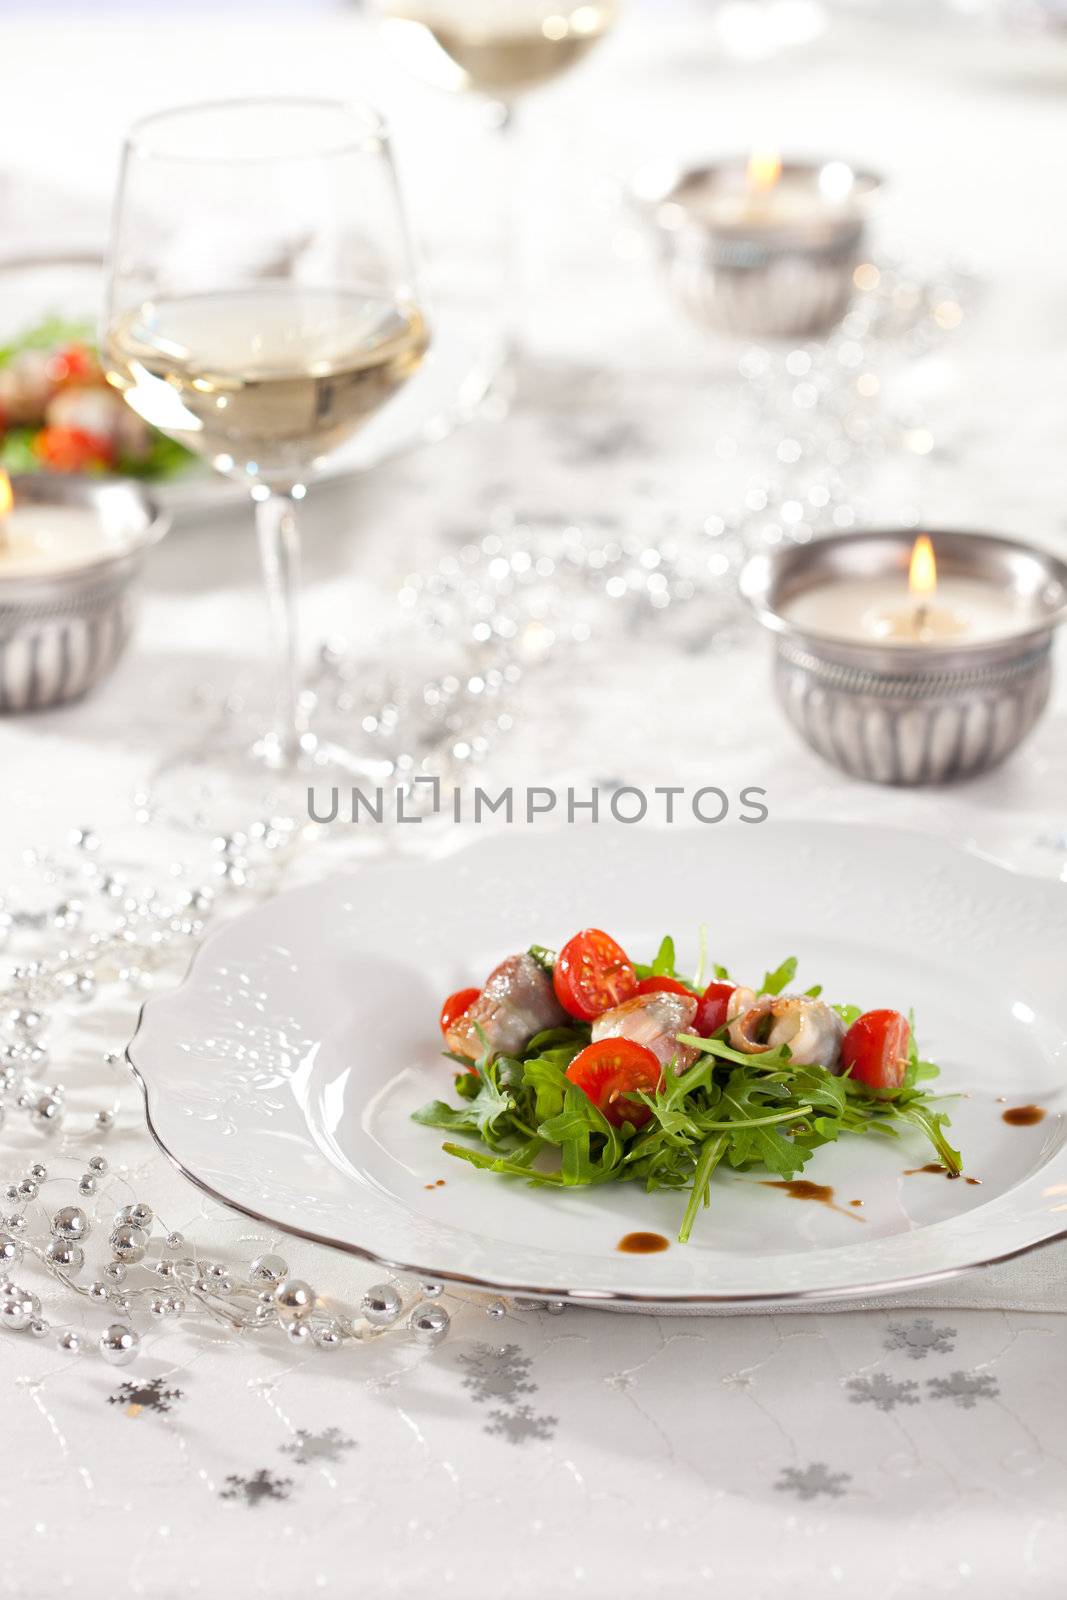 Festive table by Fotosmurf